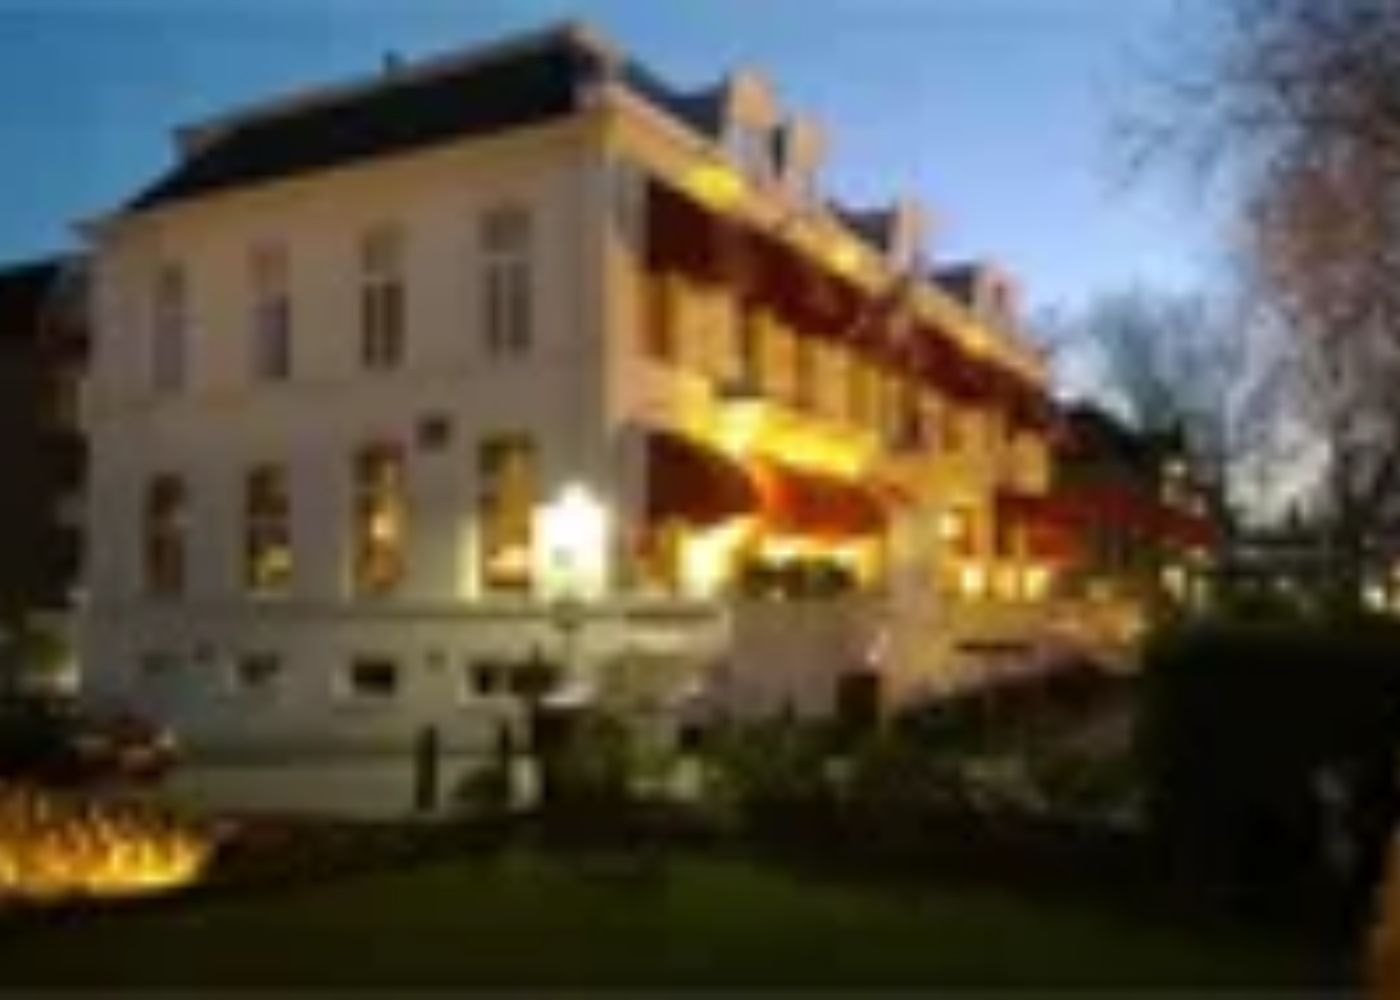 Bilderberg Grand Hotel Wientjes **** (Zwolle)